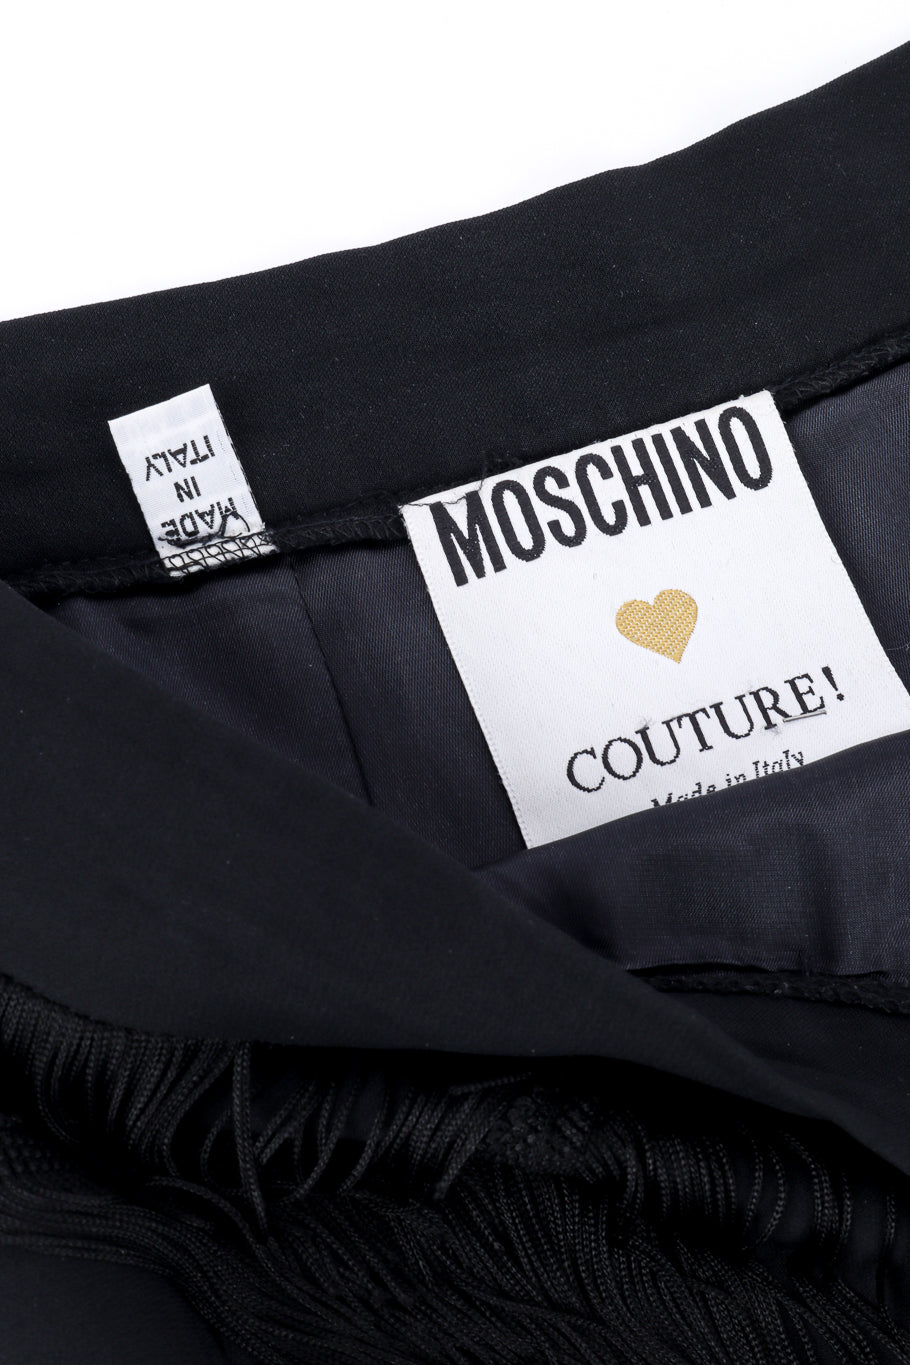 Vintage Moschino Couture Fringe Jacket and Skirt Set skirt signature label closeup @recessla